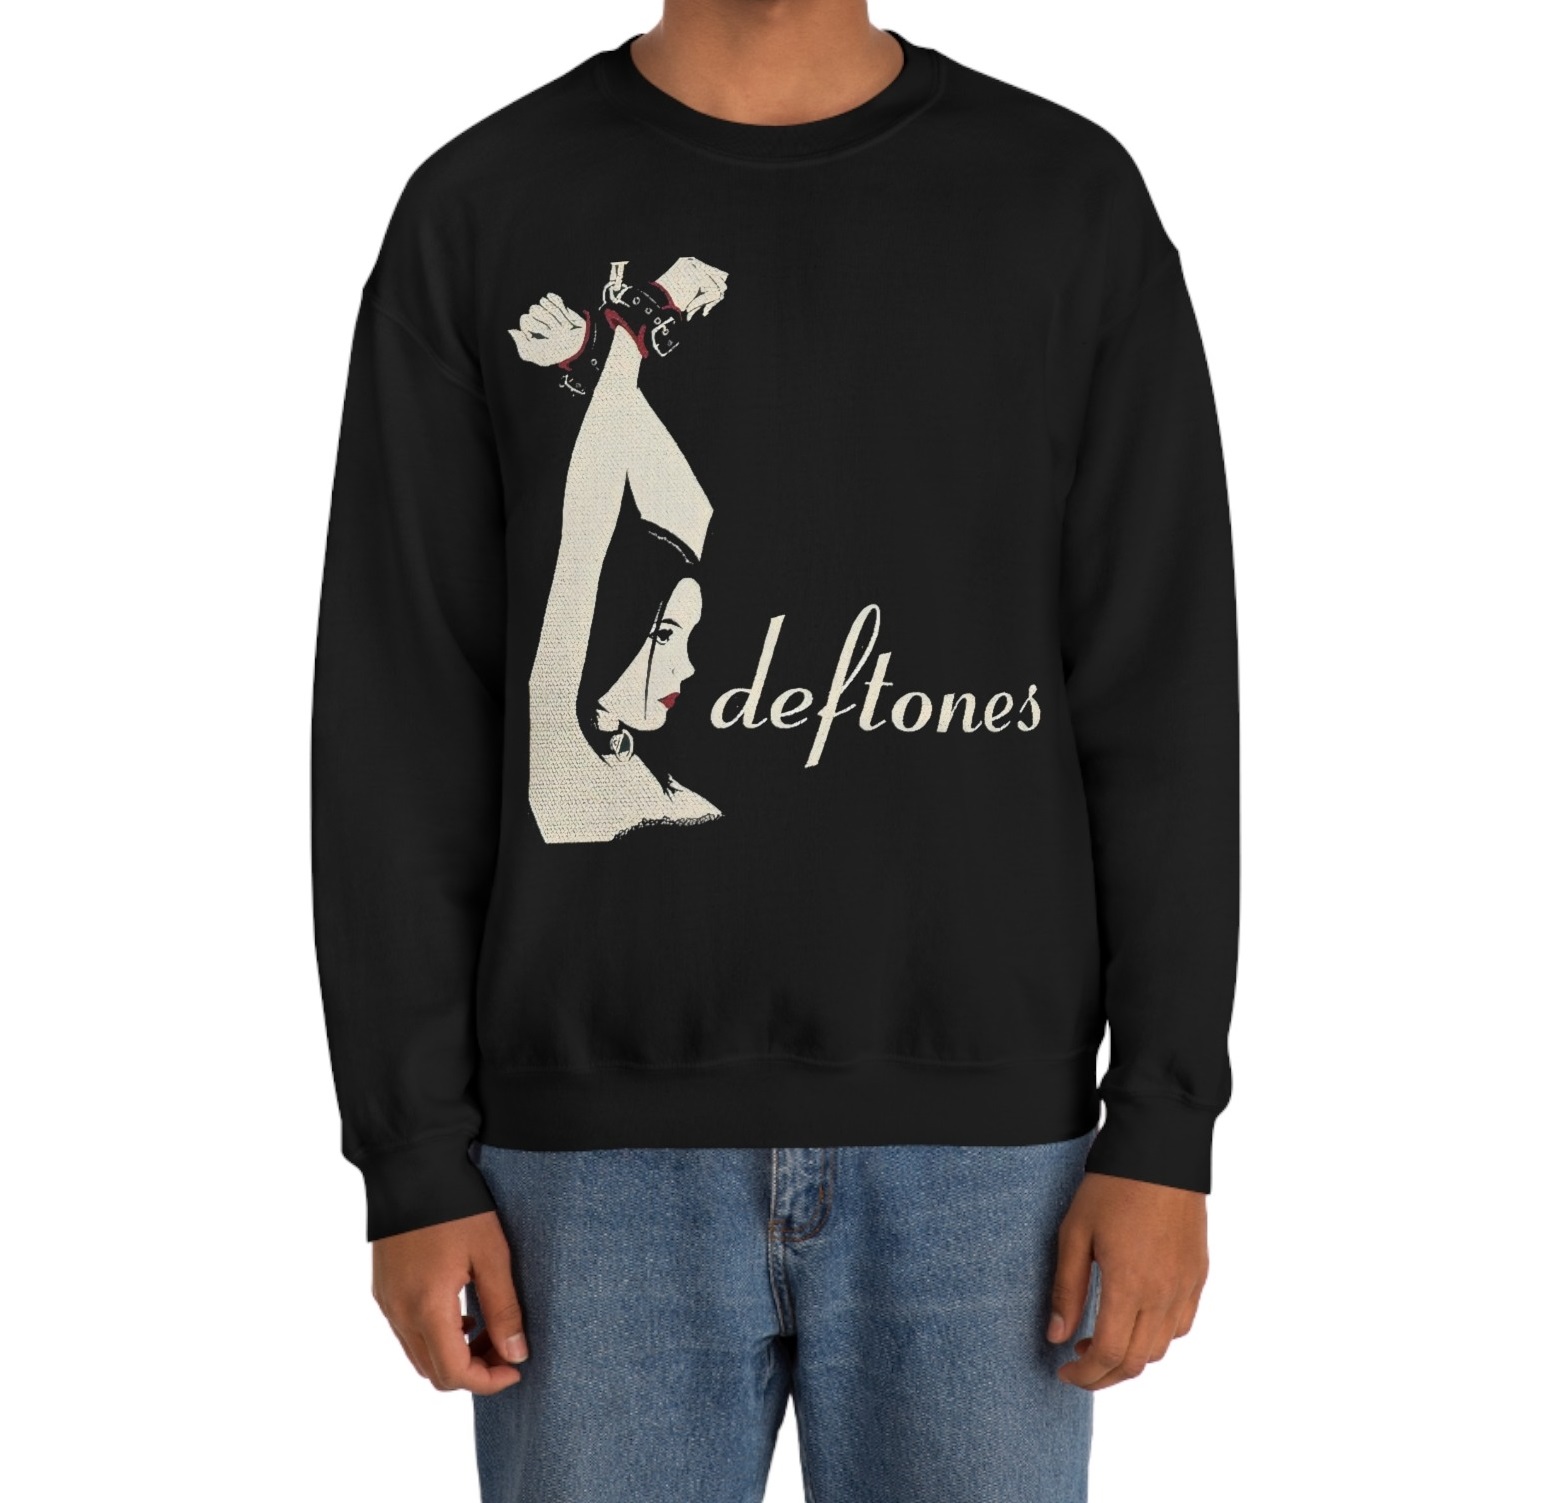 Deftone art Band Sweatshirt